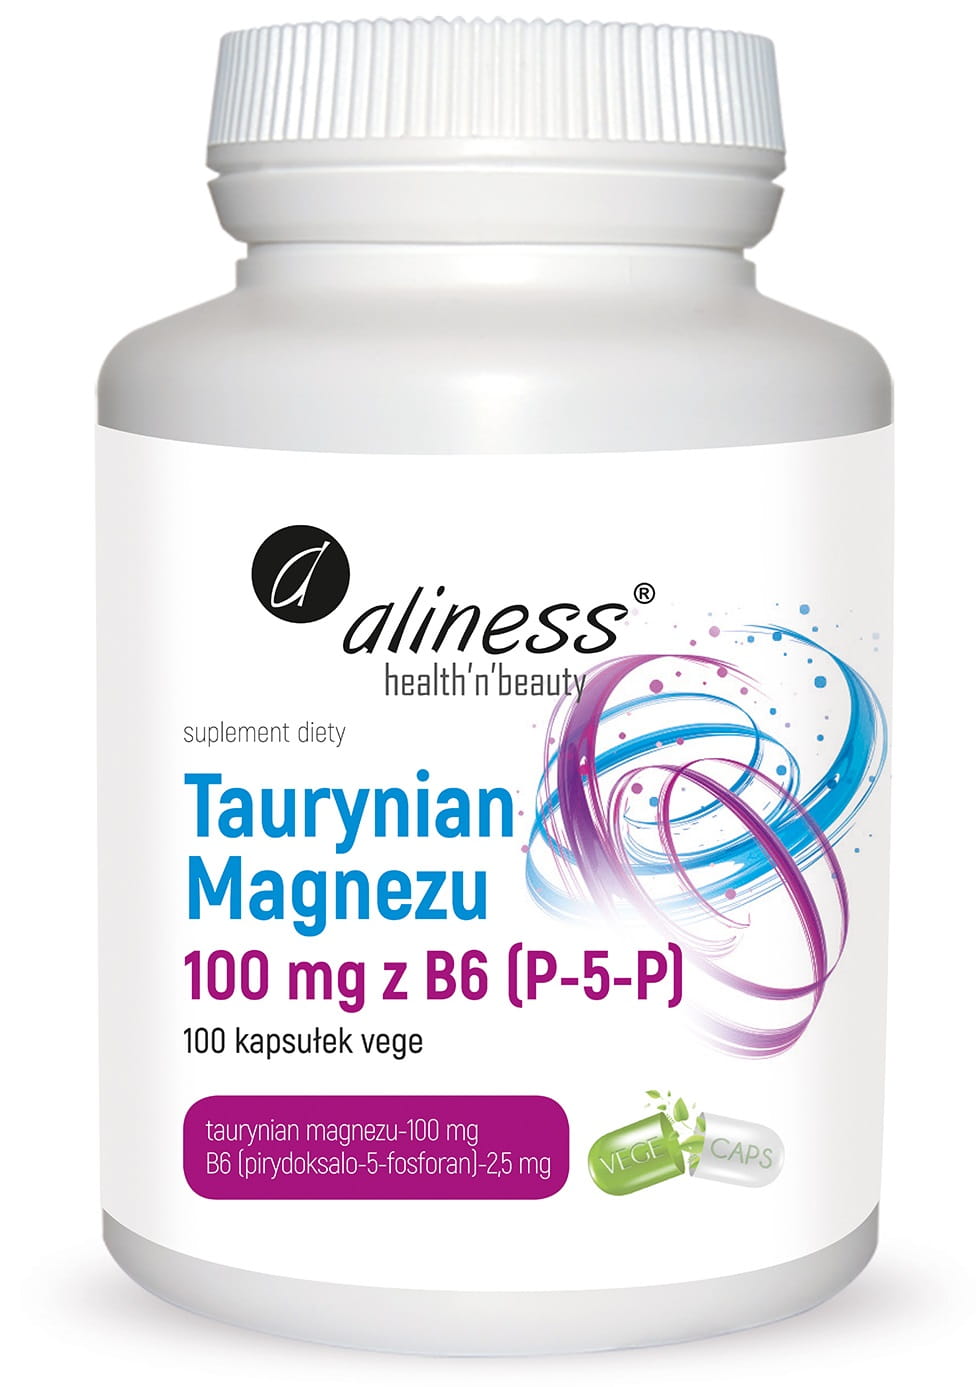 Taurynian Magnezu 100 mg z B6 (P-5-P) x 100 vege caps.